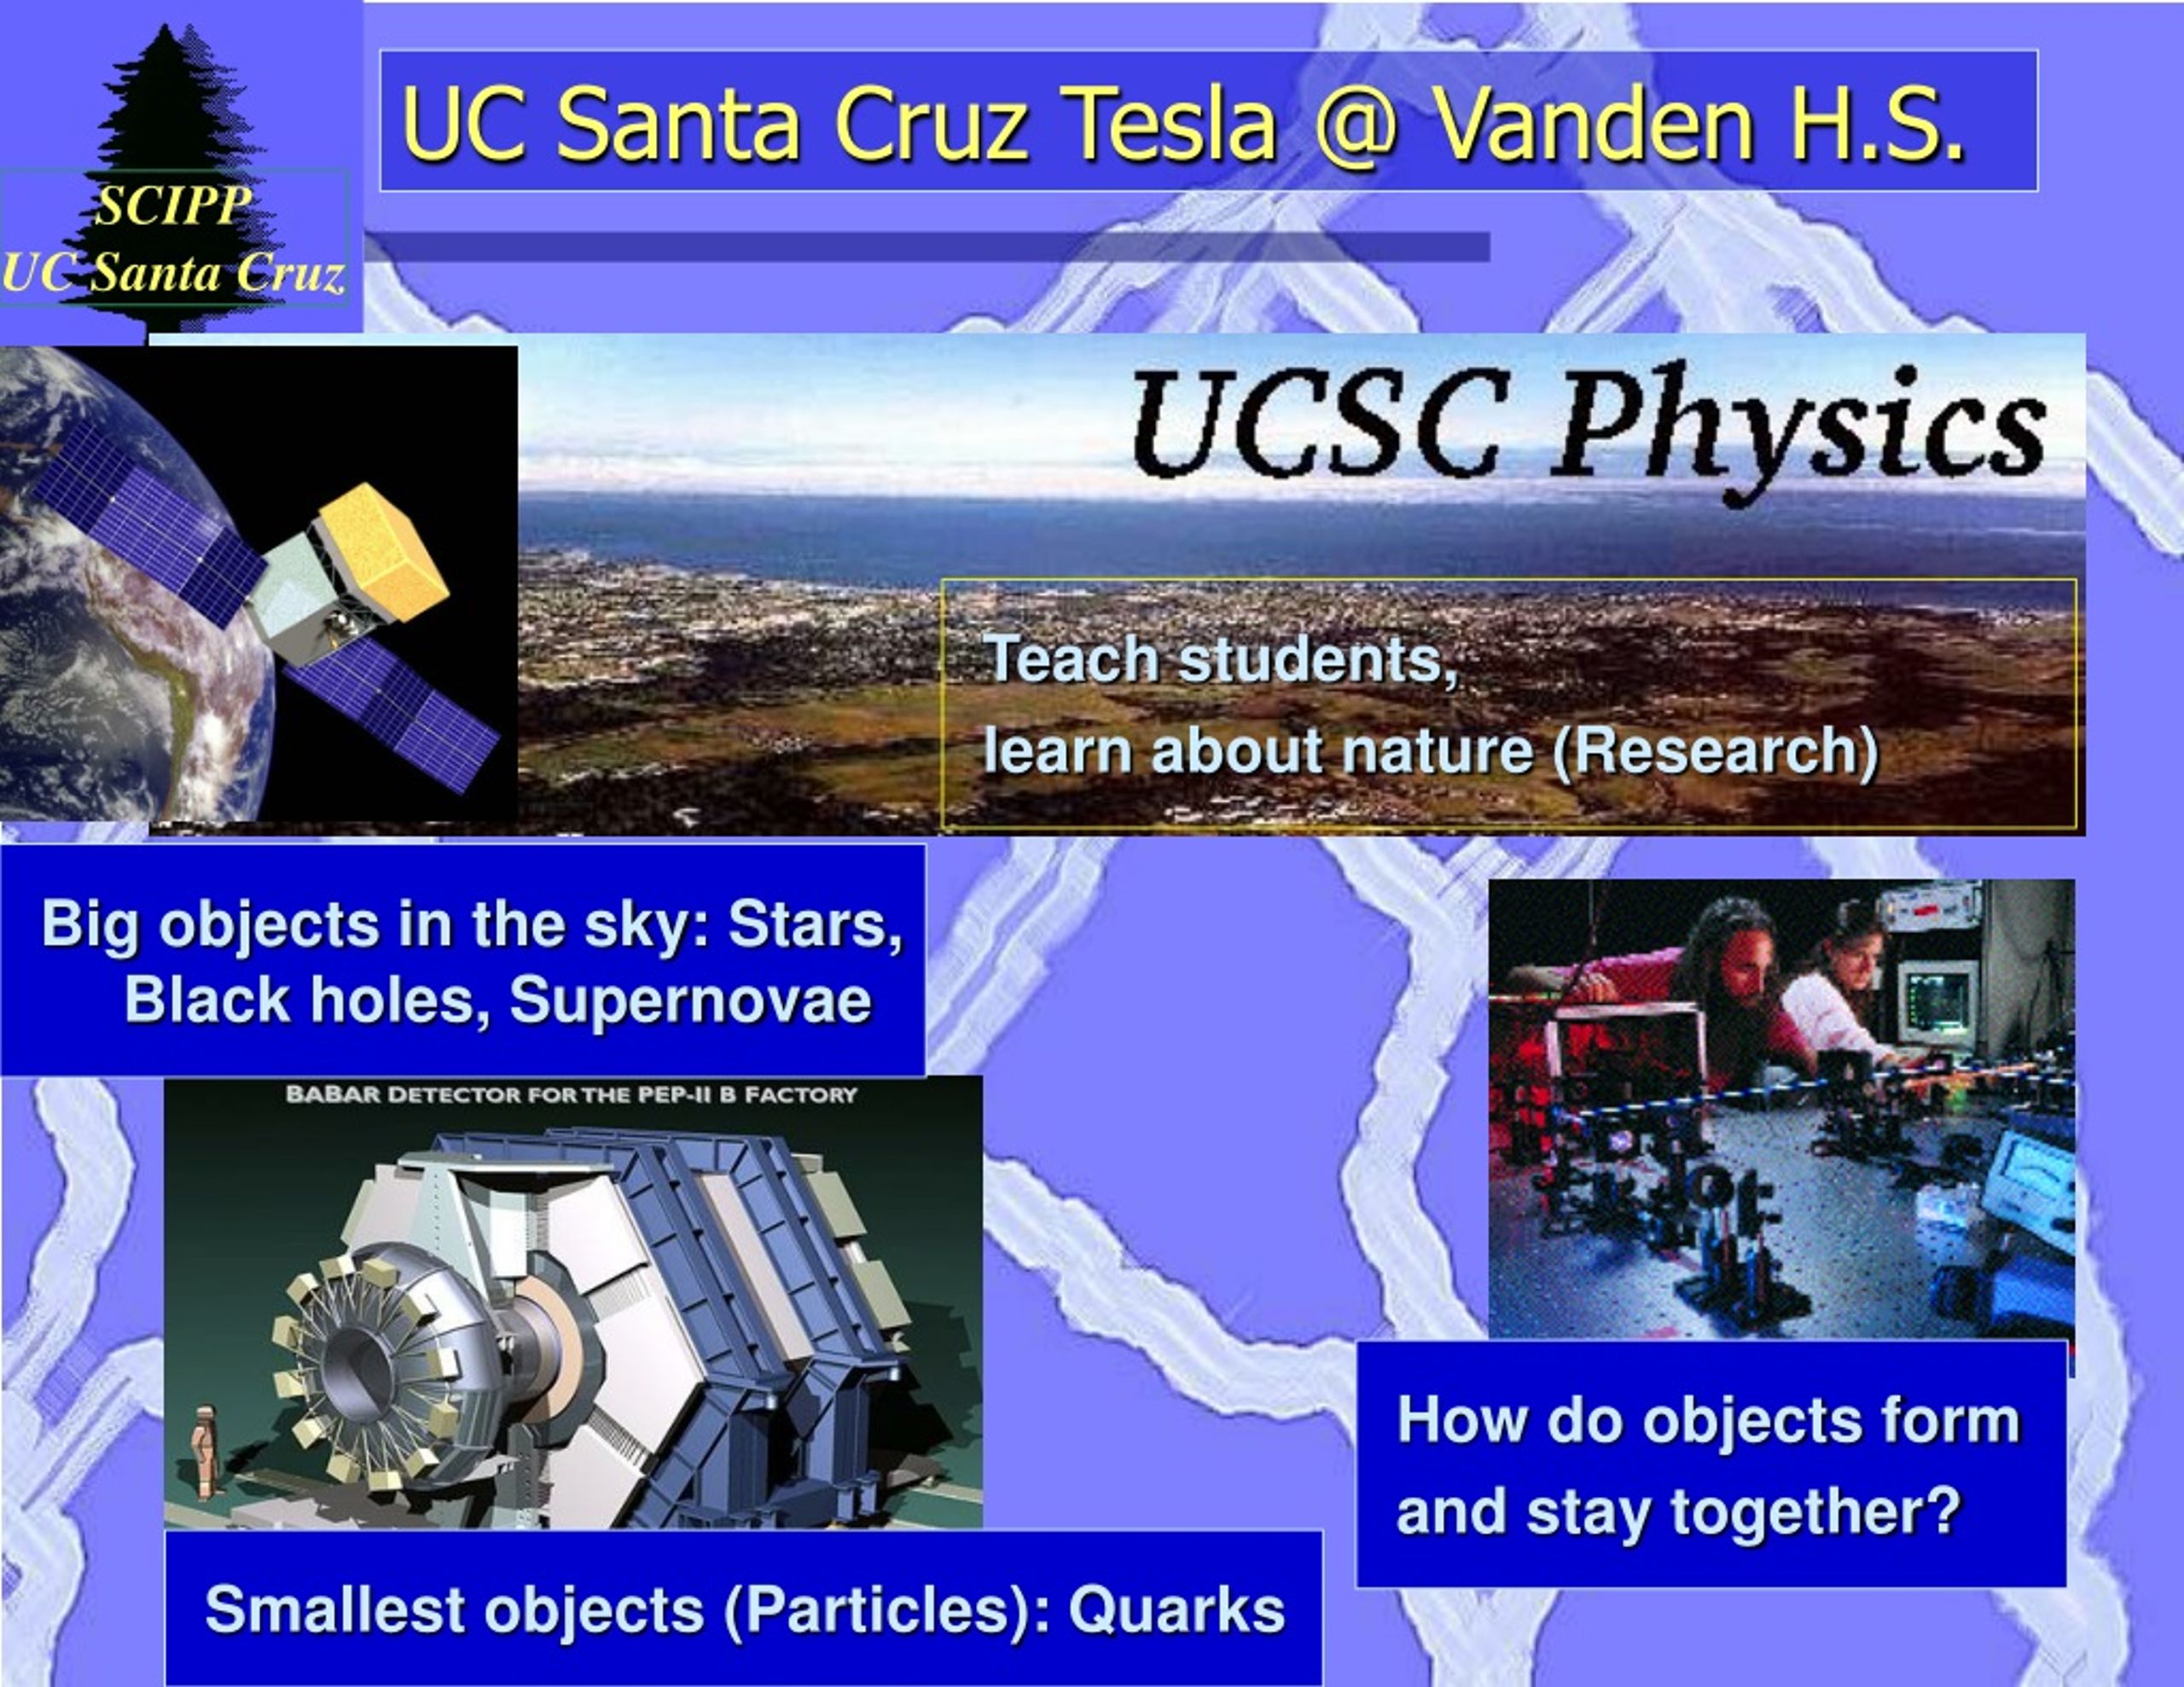 Large Tesla Coil  UCSC Physics Demonstration Room